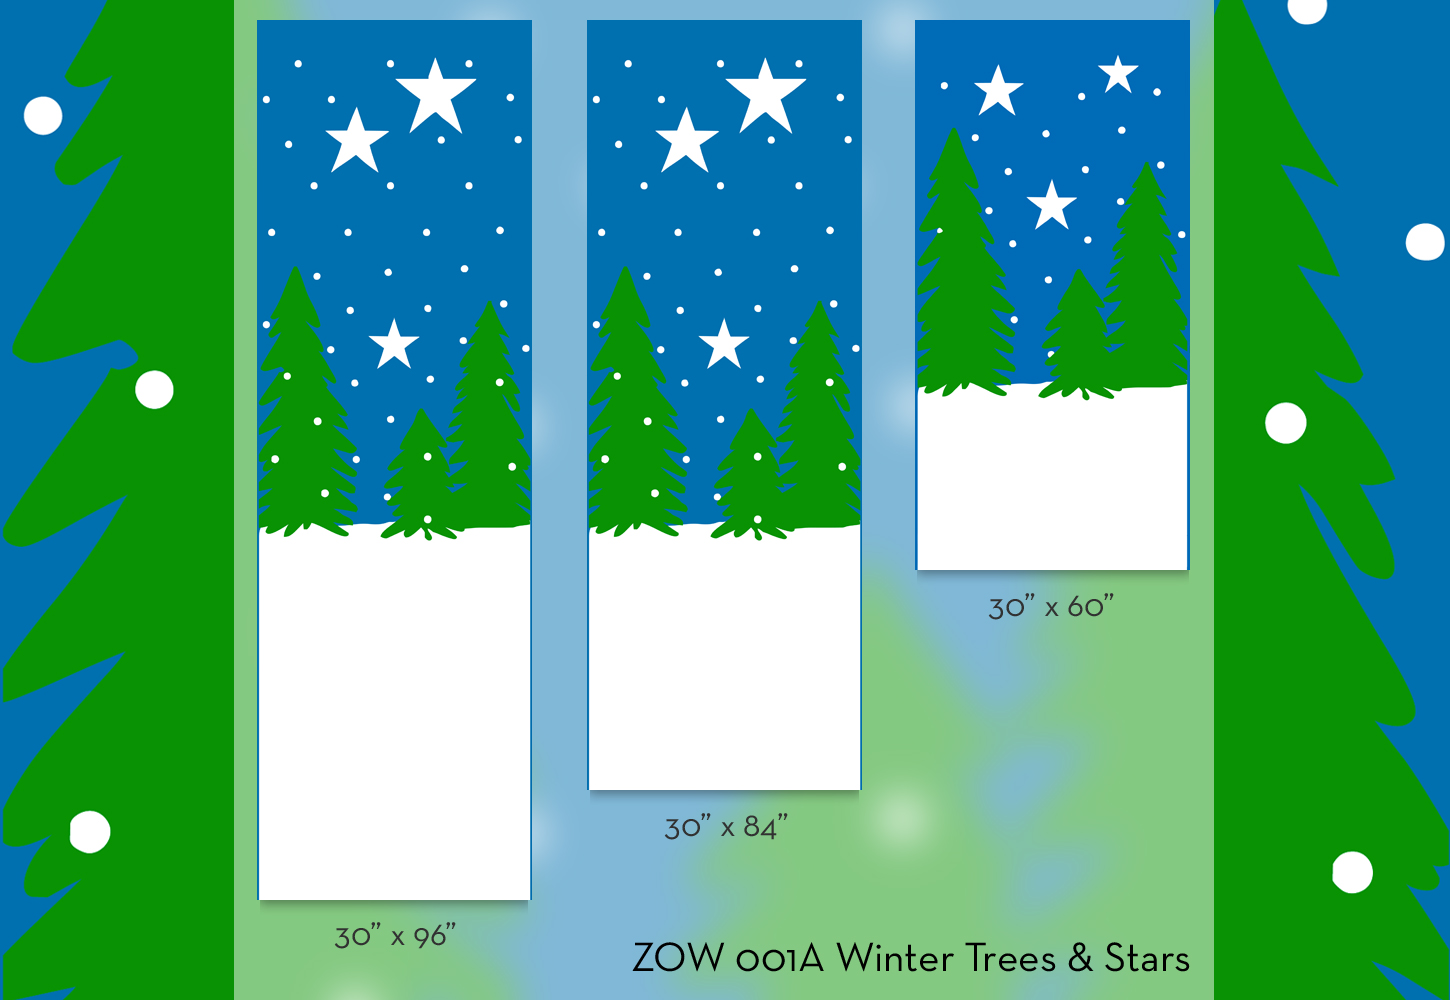 ZOW 001A Winter Trees & Stars